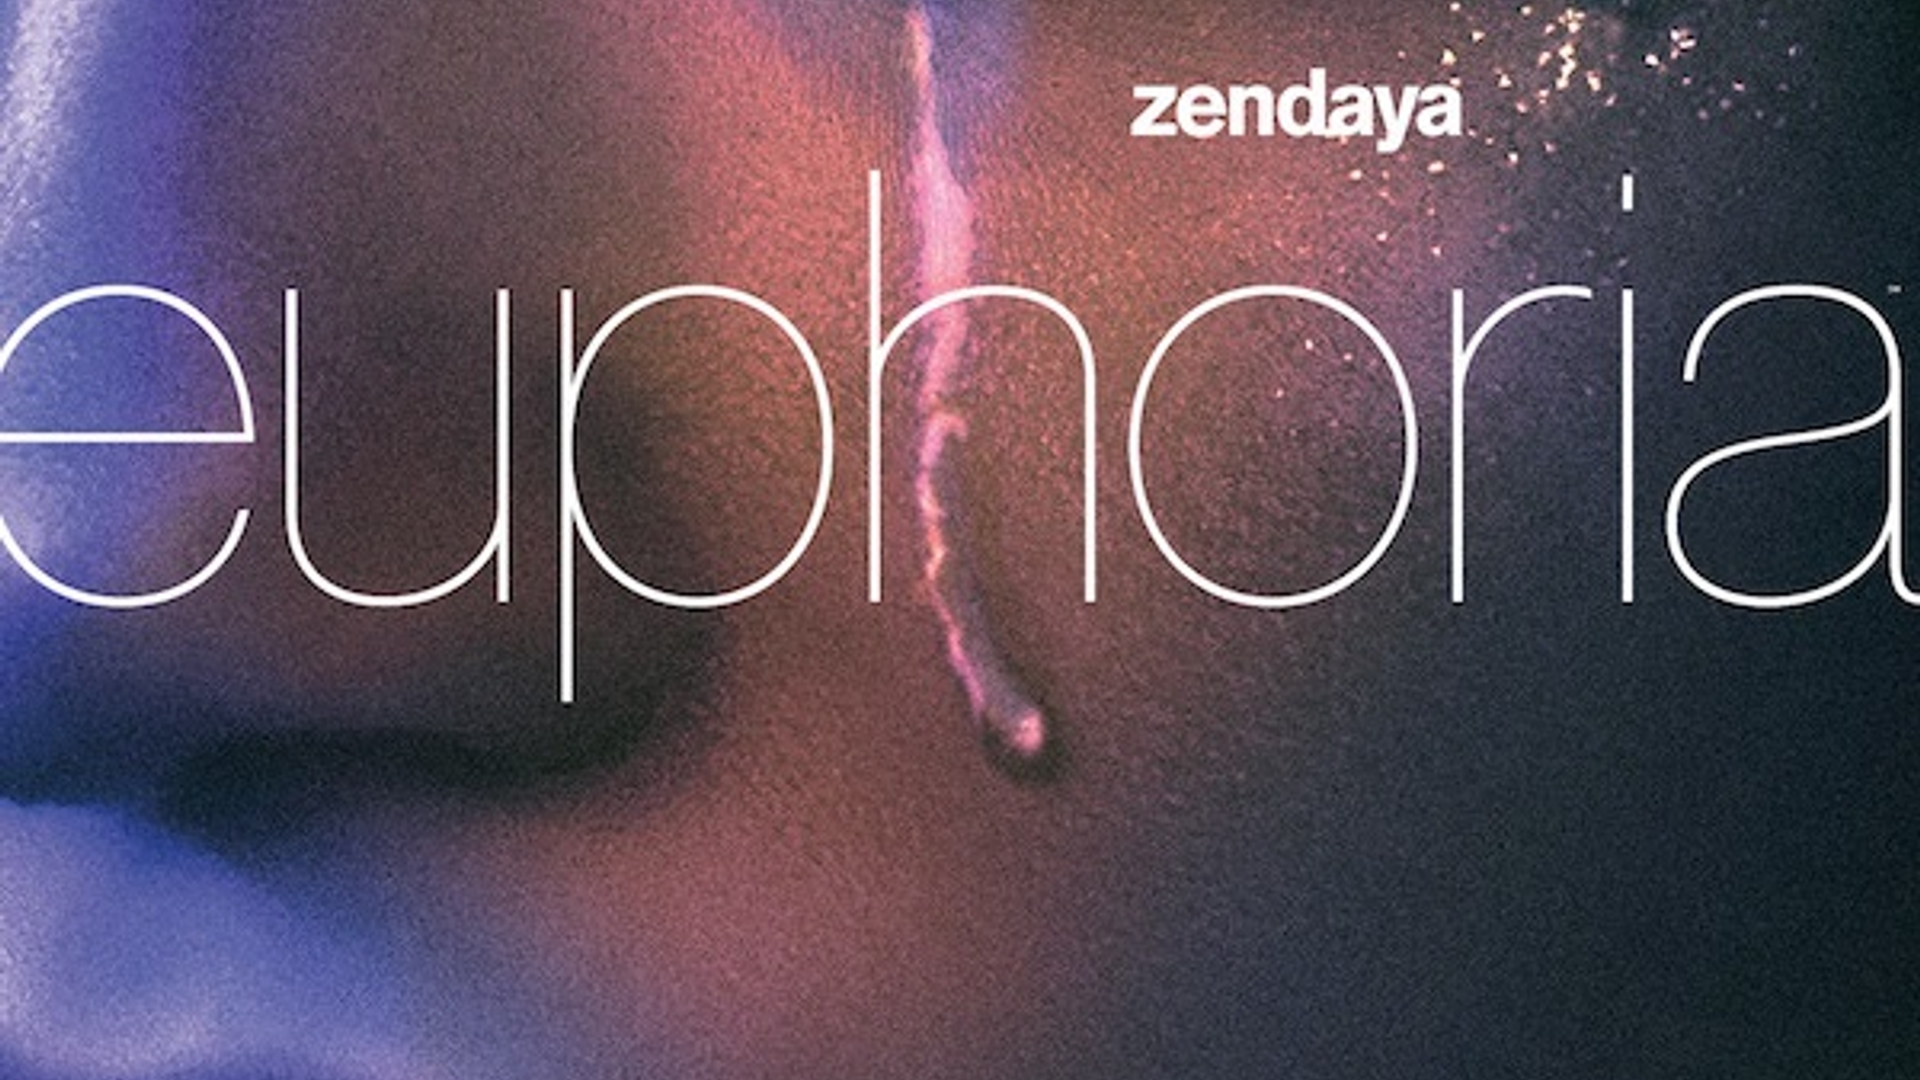 Euphoria poster